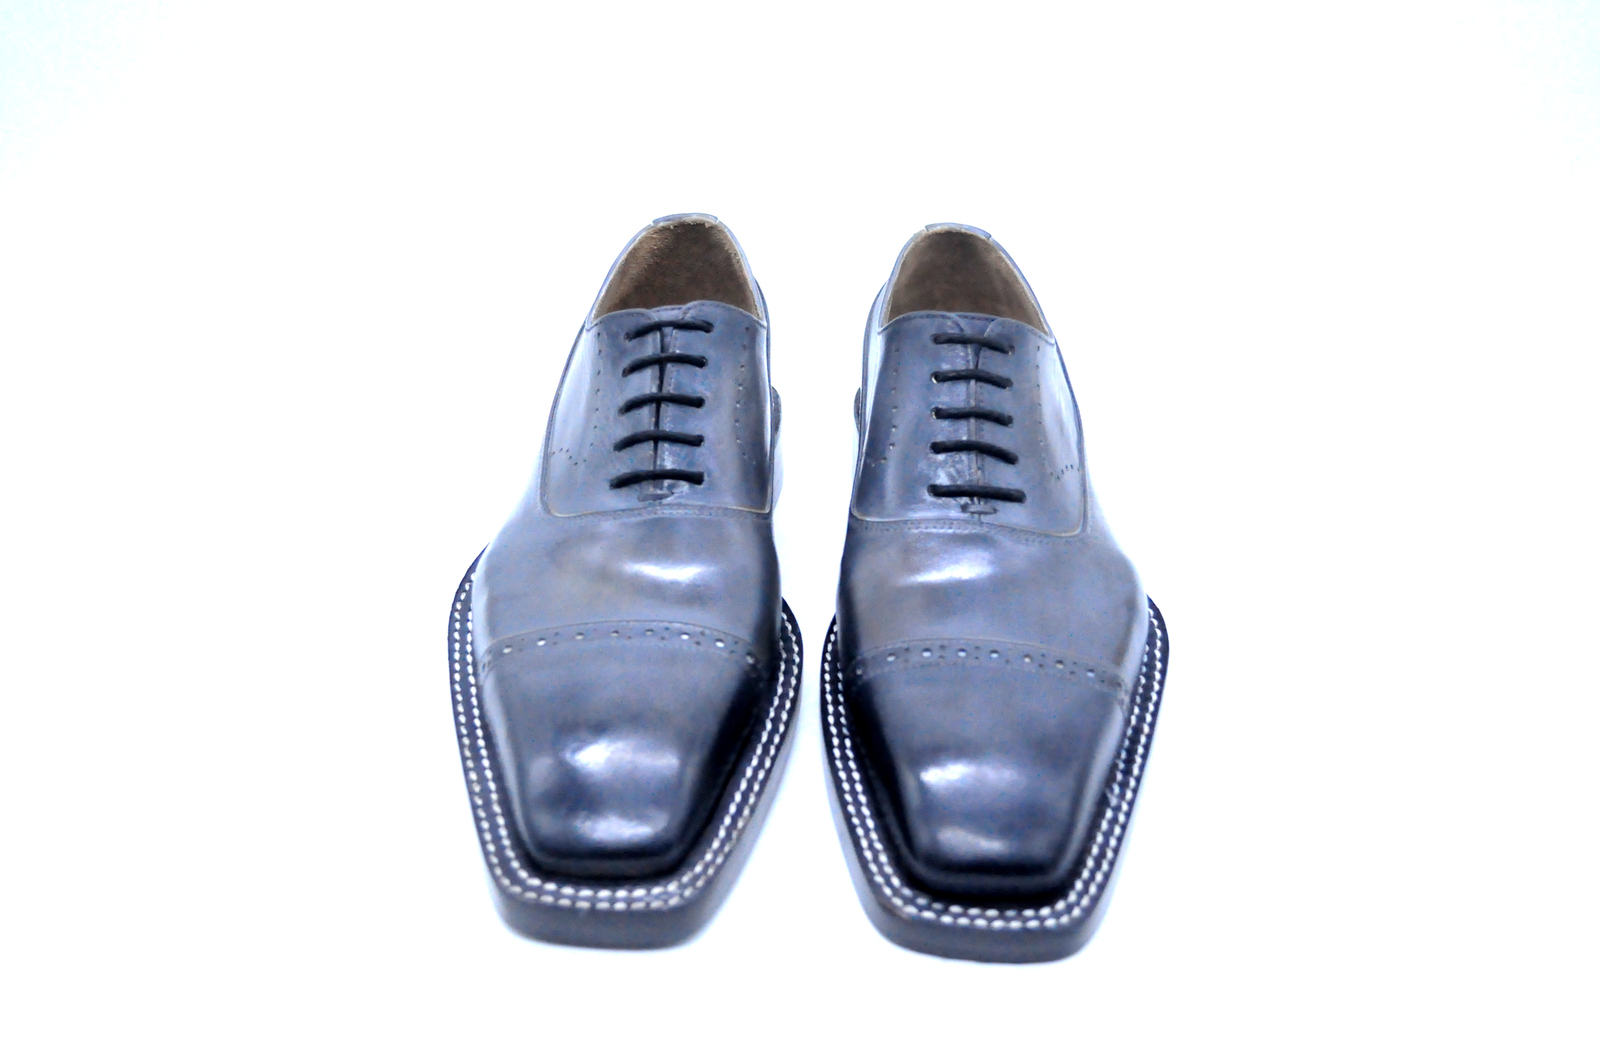 Handmade Men's Best Oxfords Leather Dress Formal Custom Made Shoes